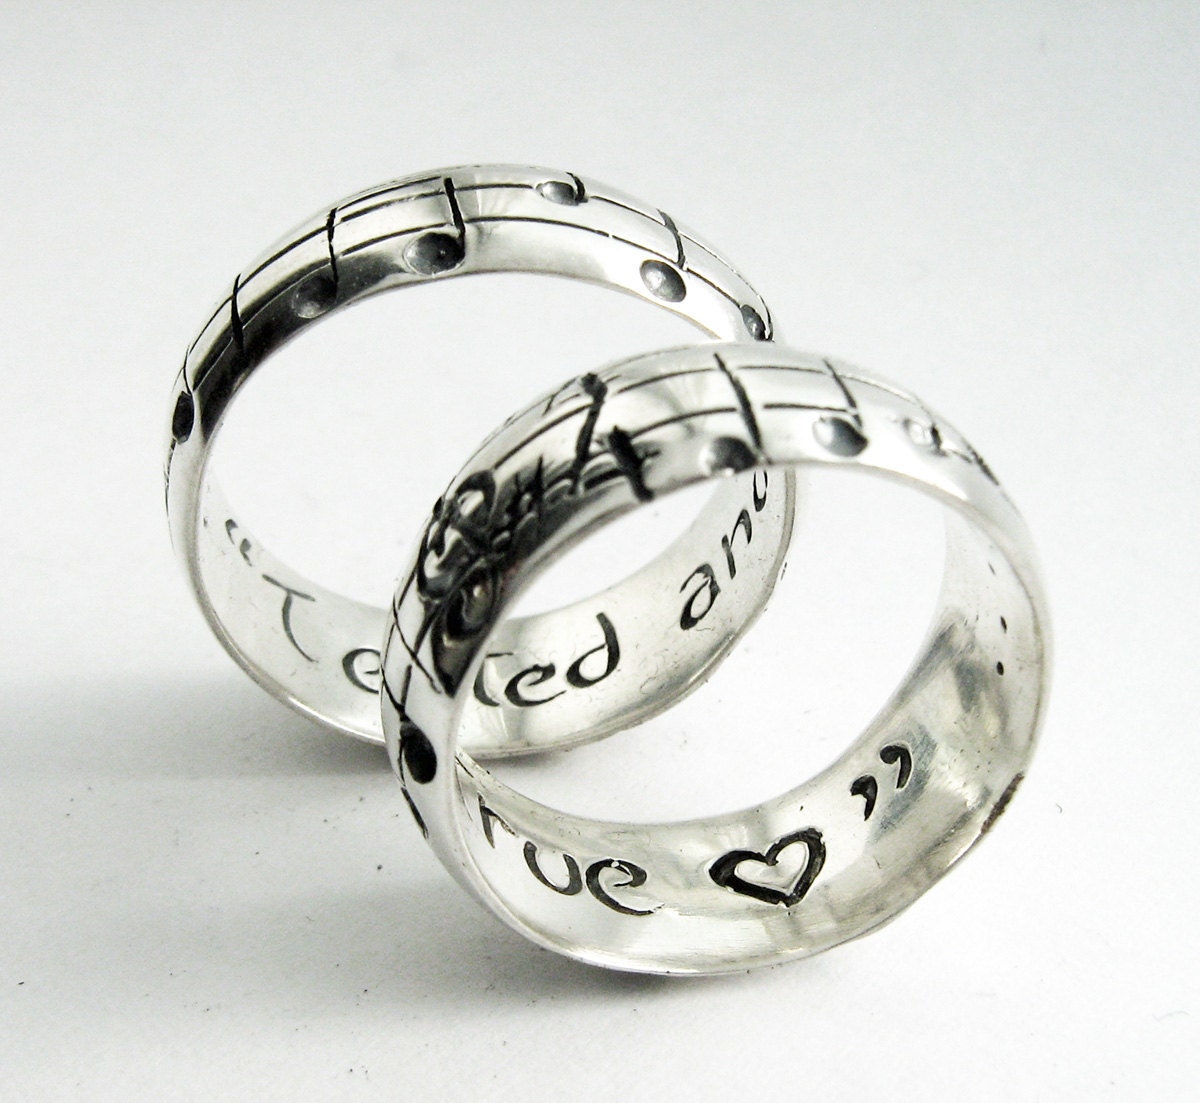 Unique handmade rings for women near me lyrics the civil